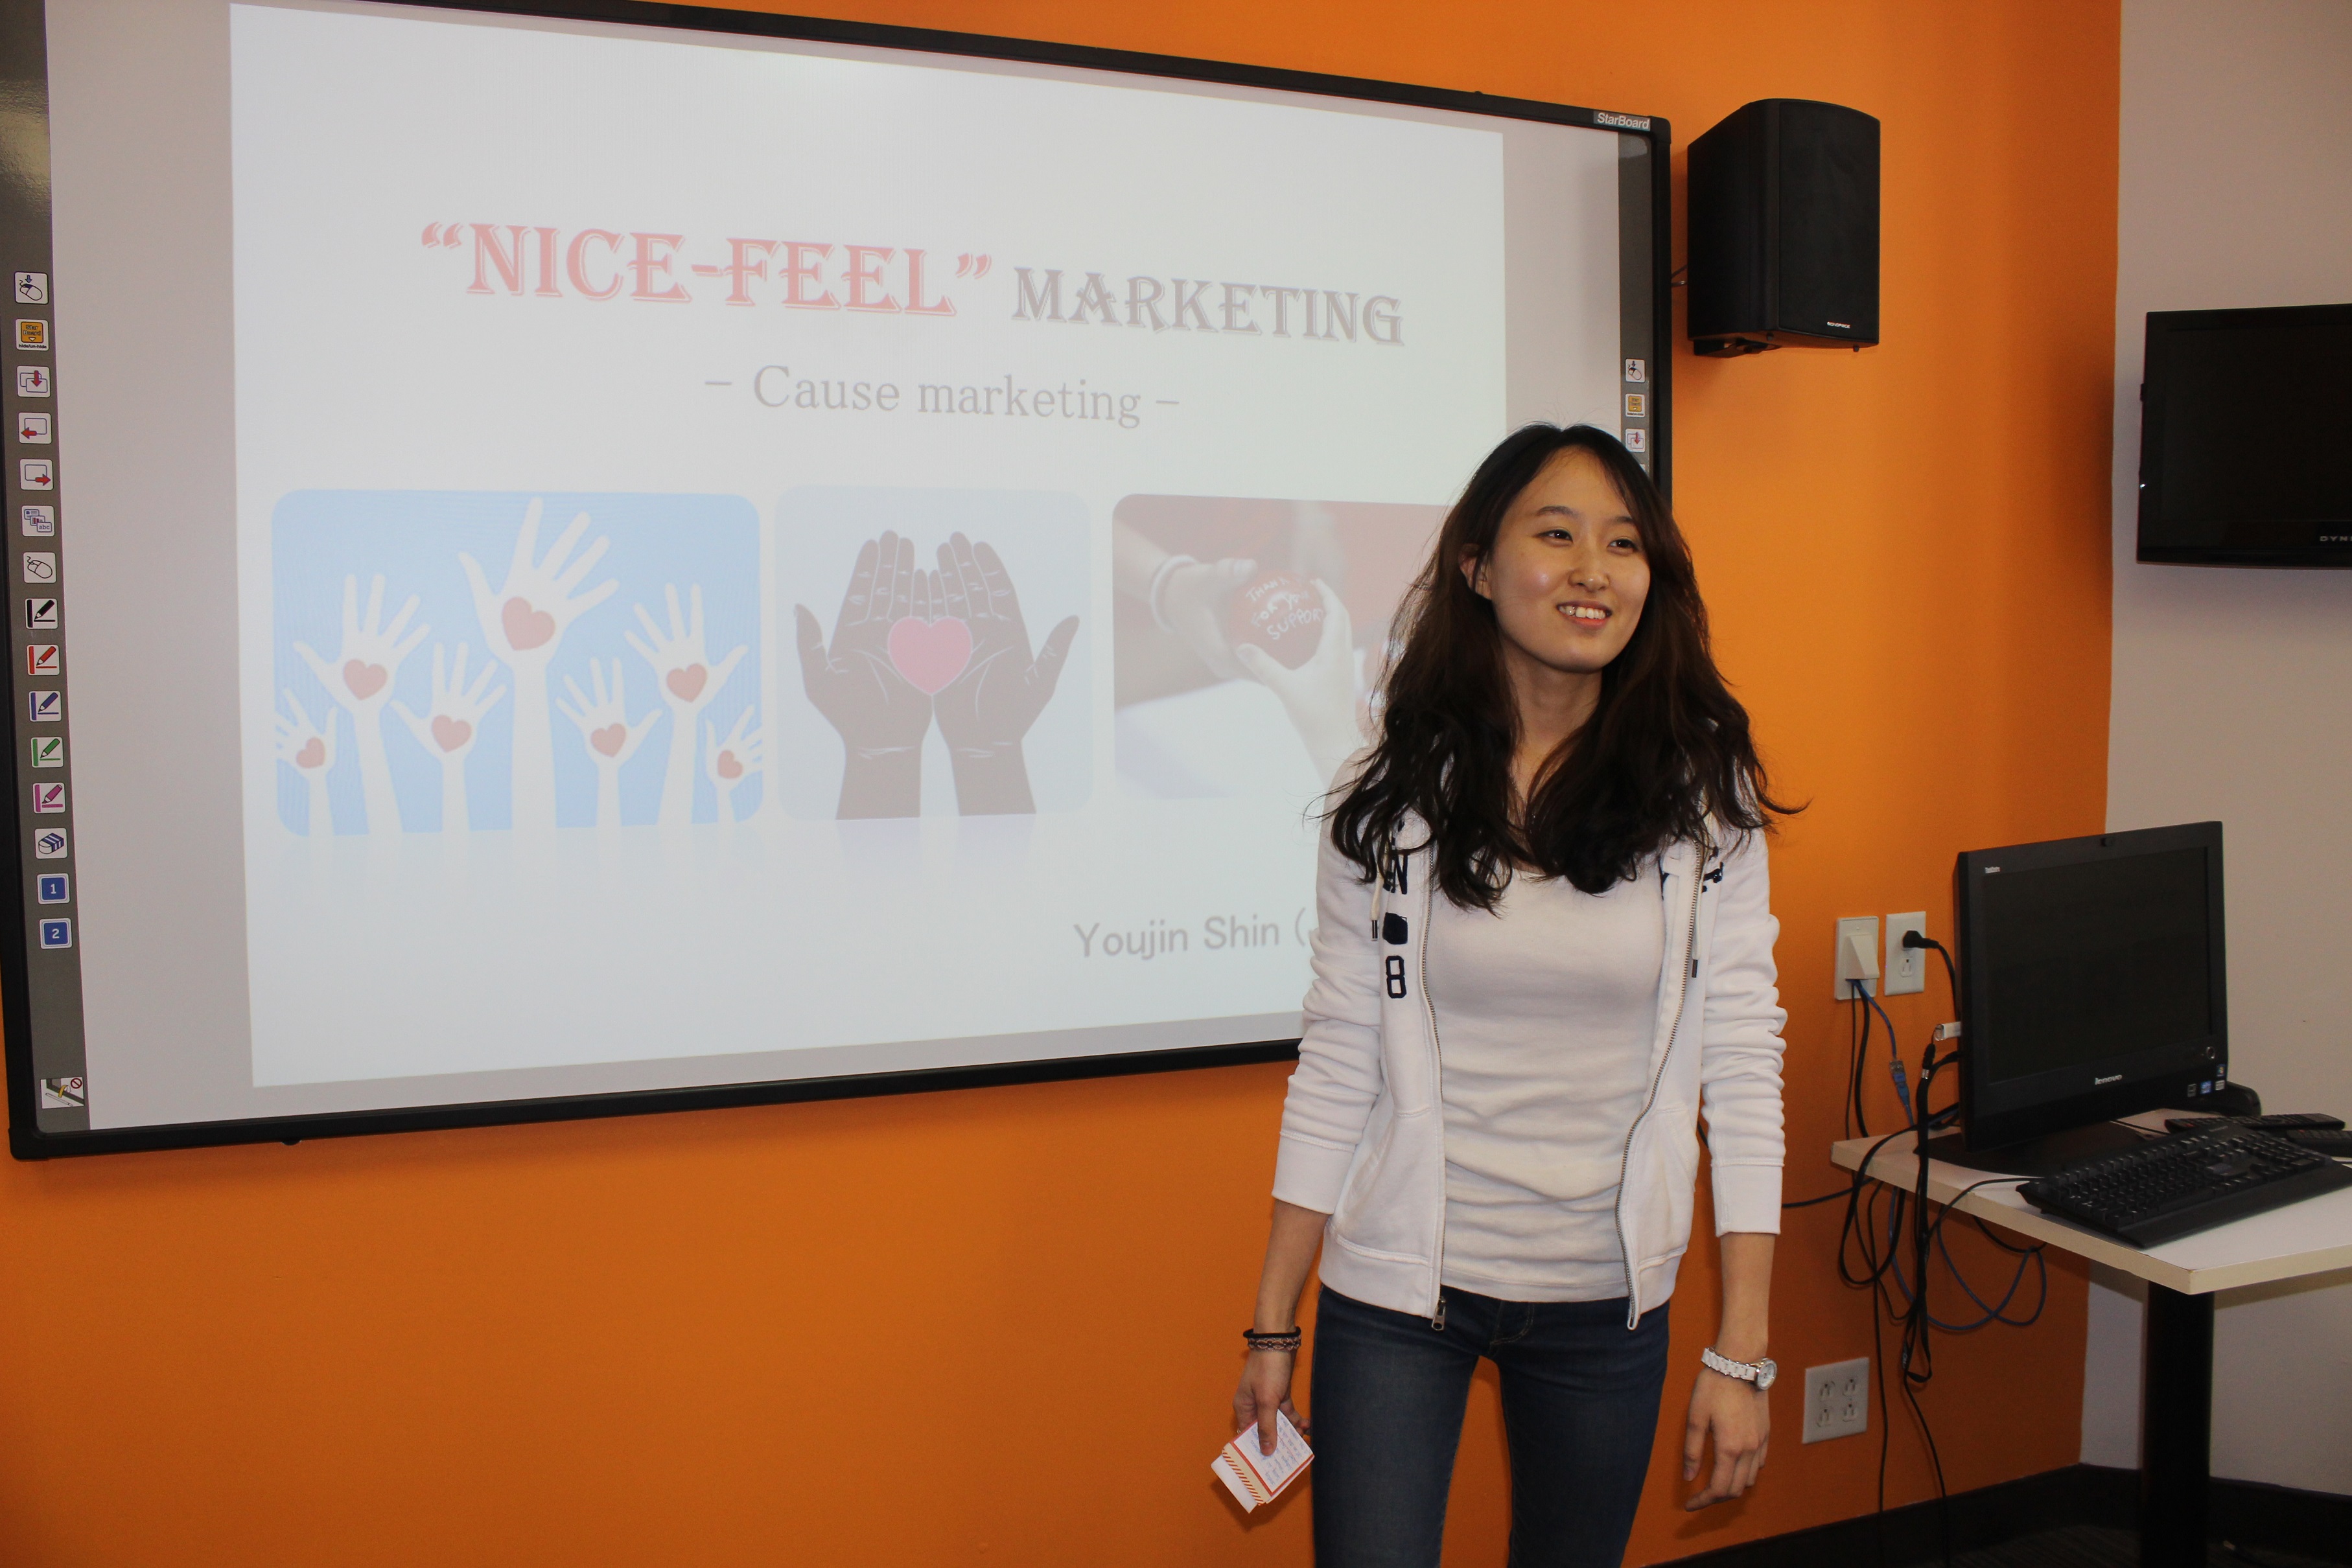 Feeling marketing. Show презентация. Student presentation. Show presentation. A student giving a presentation.